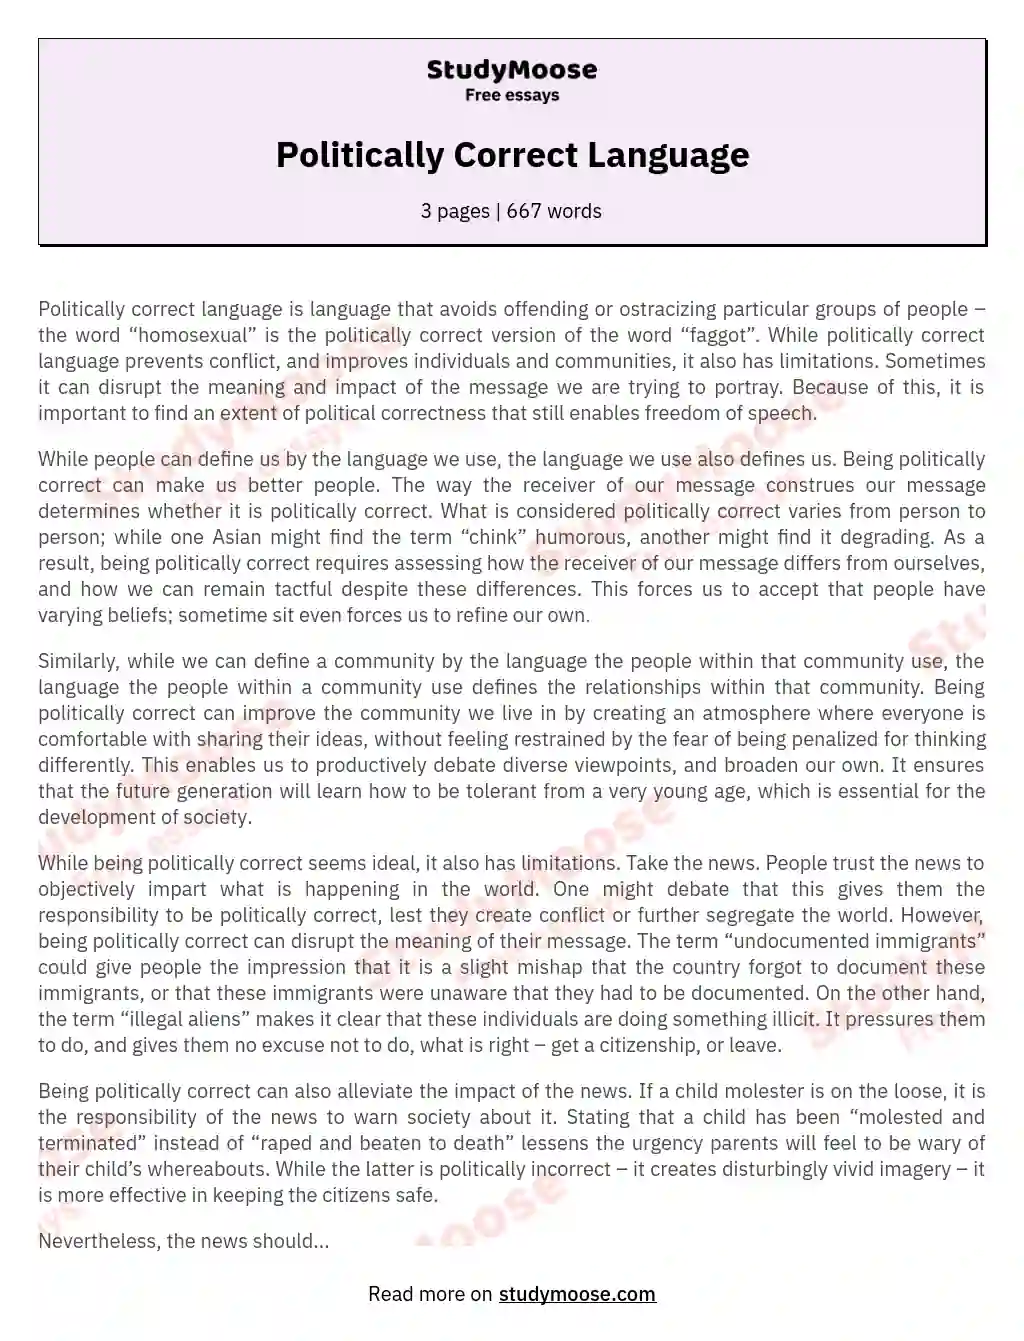 Politically Correct Language essay